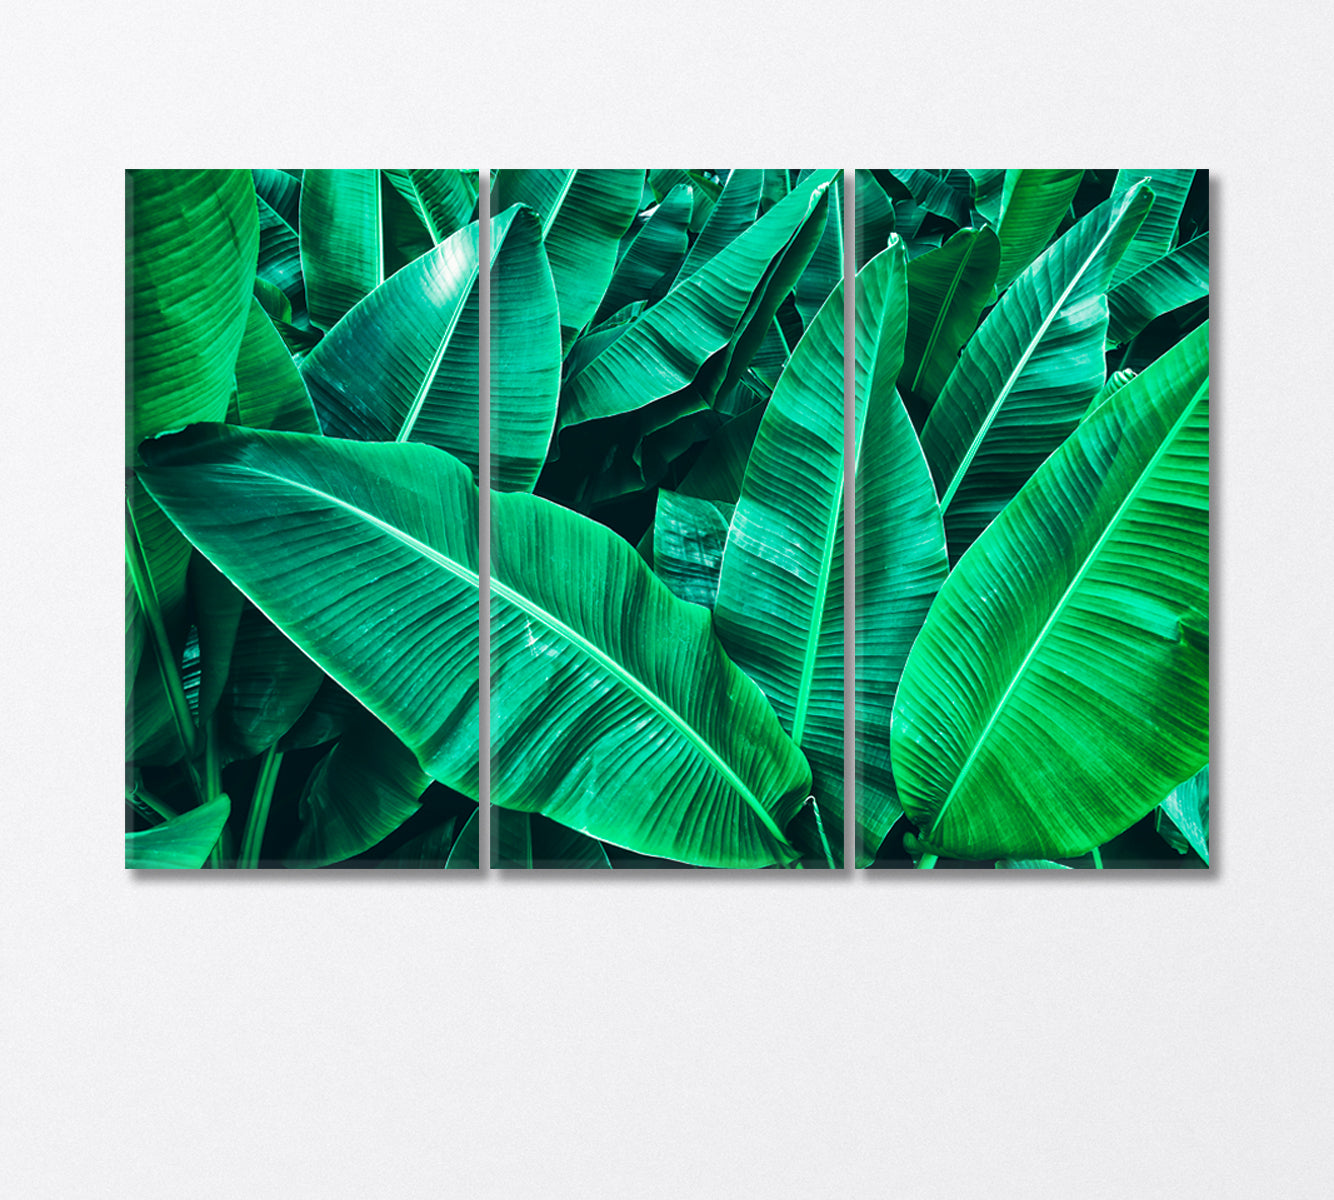 Tropical Banana Leaves Canvas Print-Canvas Print-CetArt-3 Panels-36x24 inches-CetArt